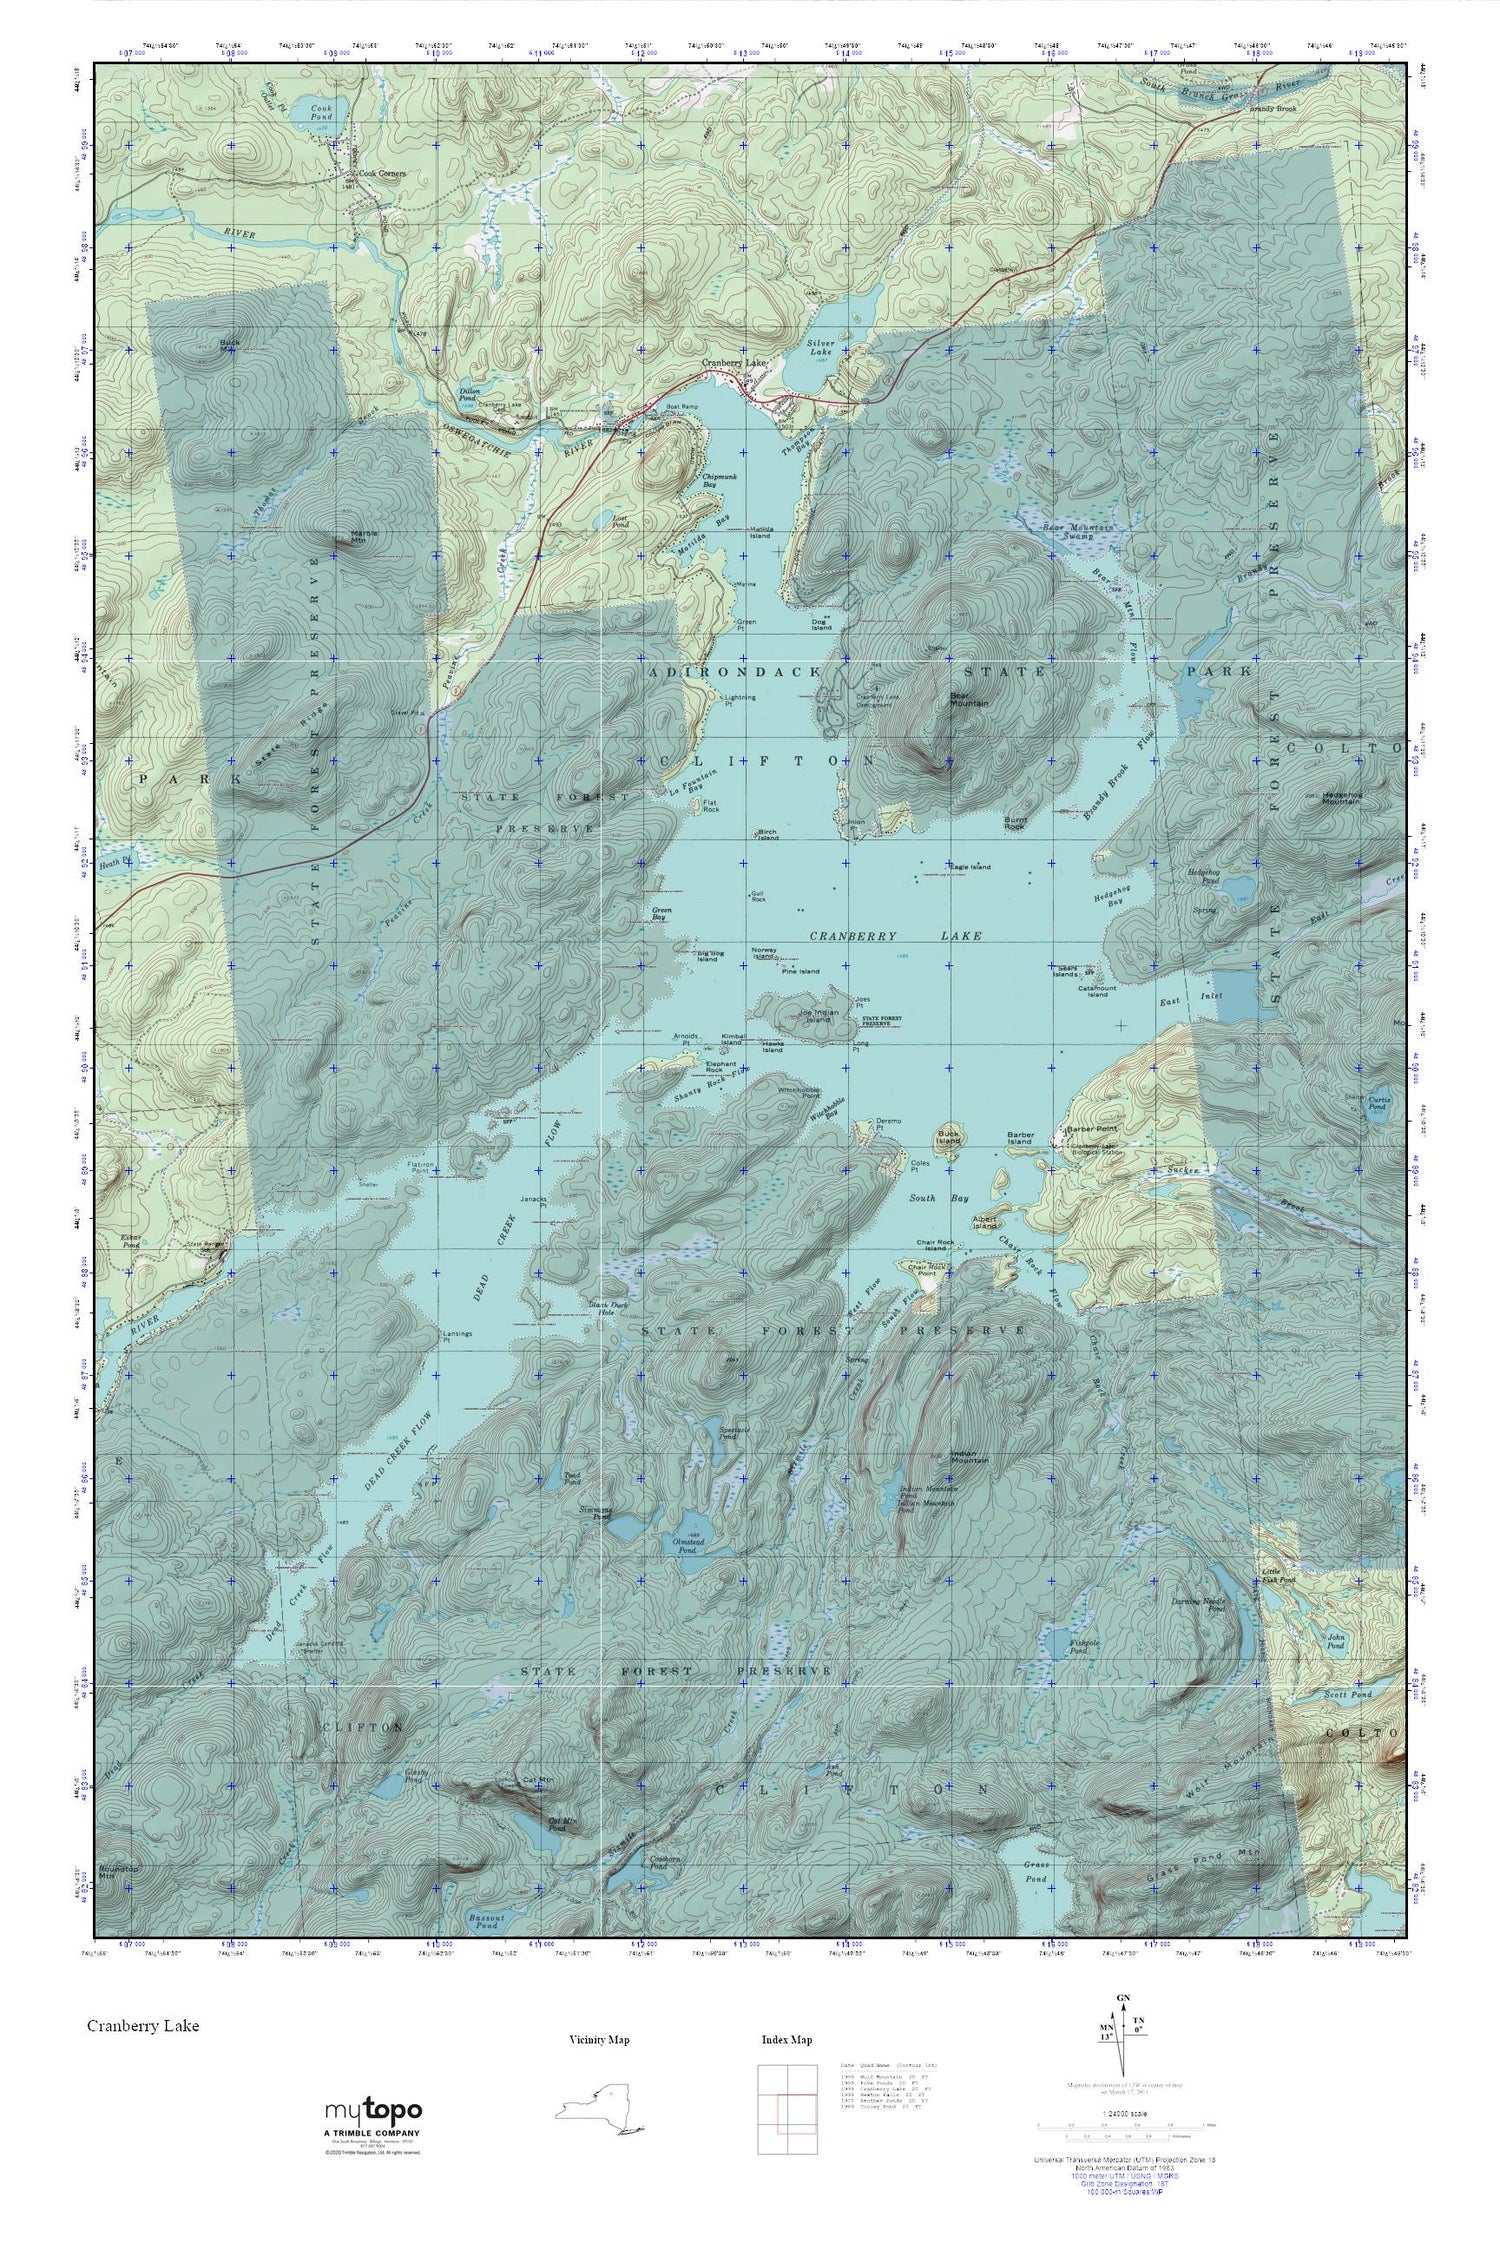 Cranberry Lake MyTopo Explorer Series Map Image